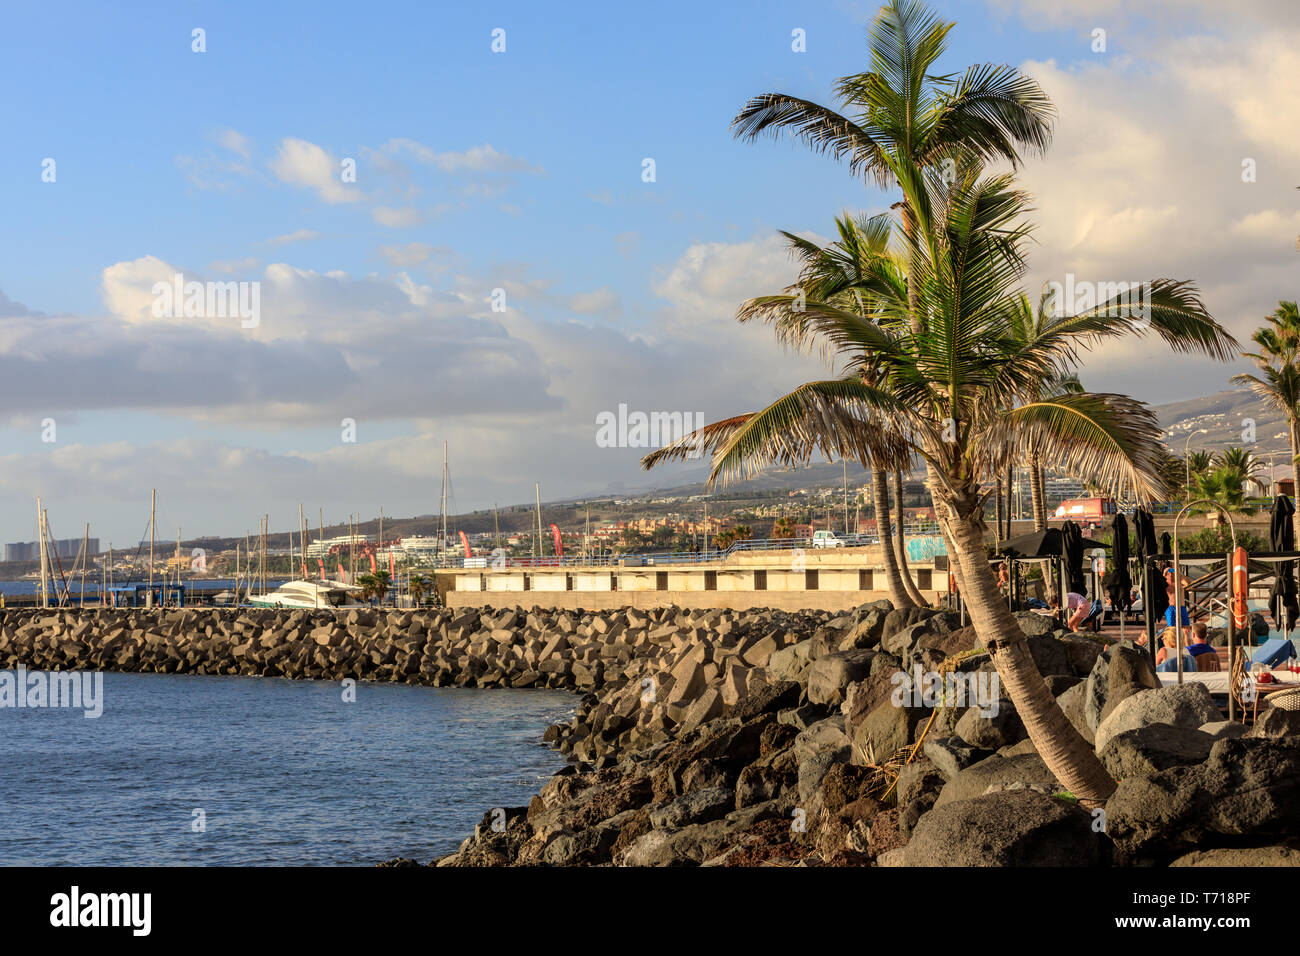 Puerto Colon marina near the Costa Adeje on the island of Tenerife Stock Photo